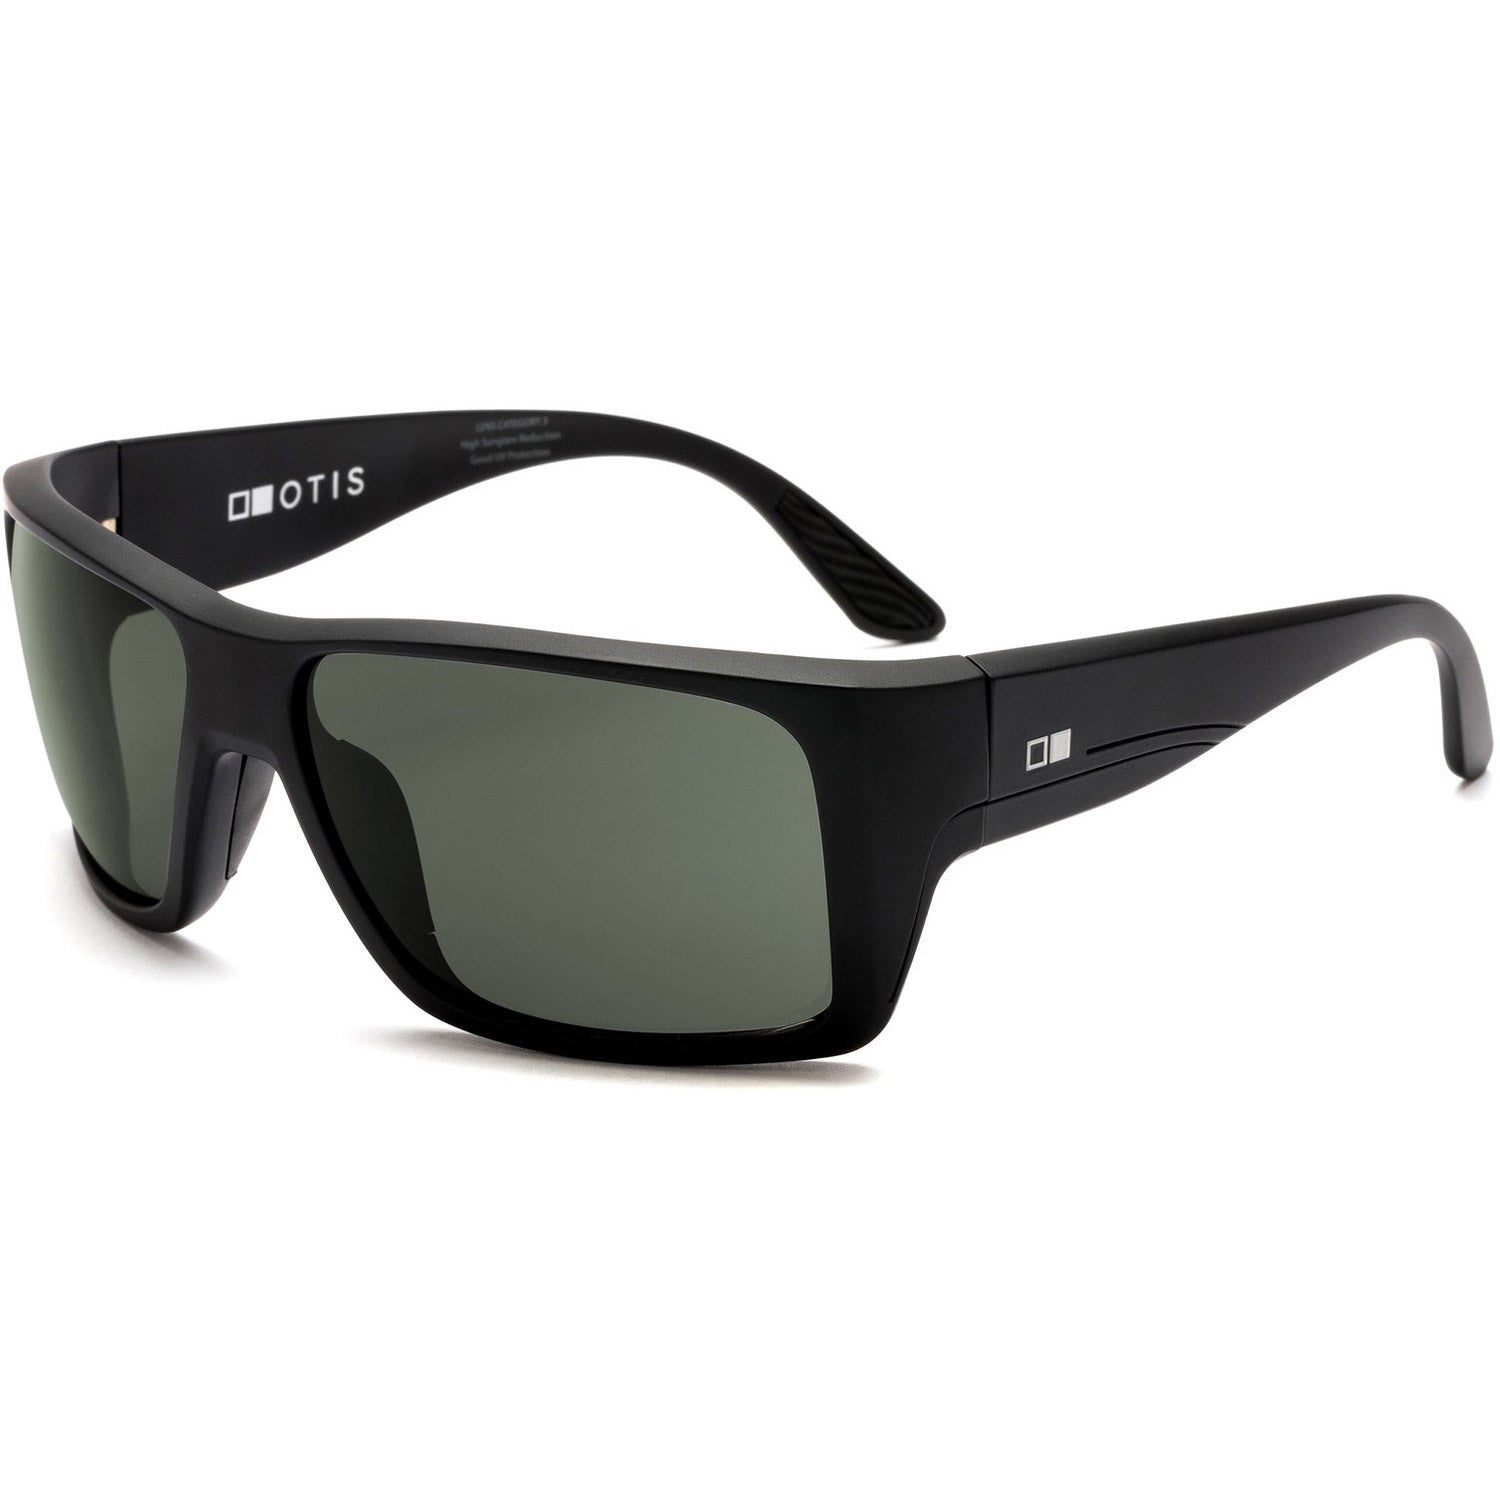 Otis Coastin Sunglasses Matte Black / Grey Lens